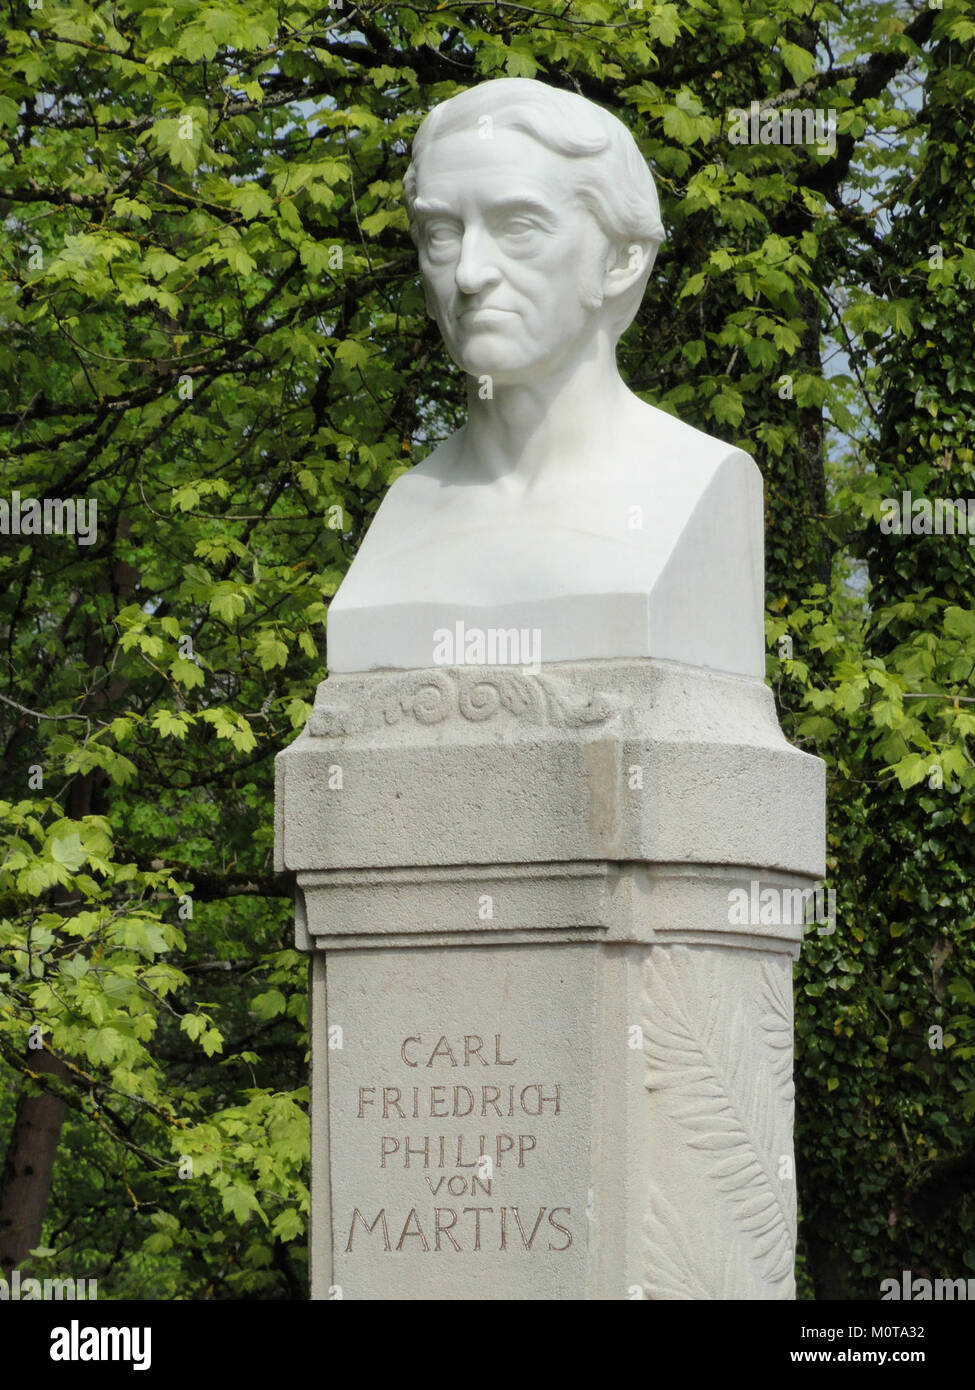 Carl Friedrich Philipp von Martius memorial - DSC07558 Stock Photo